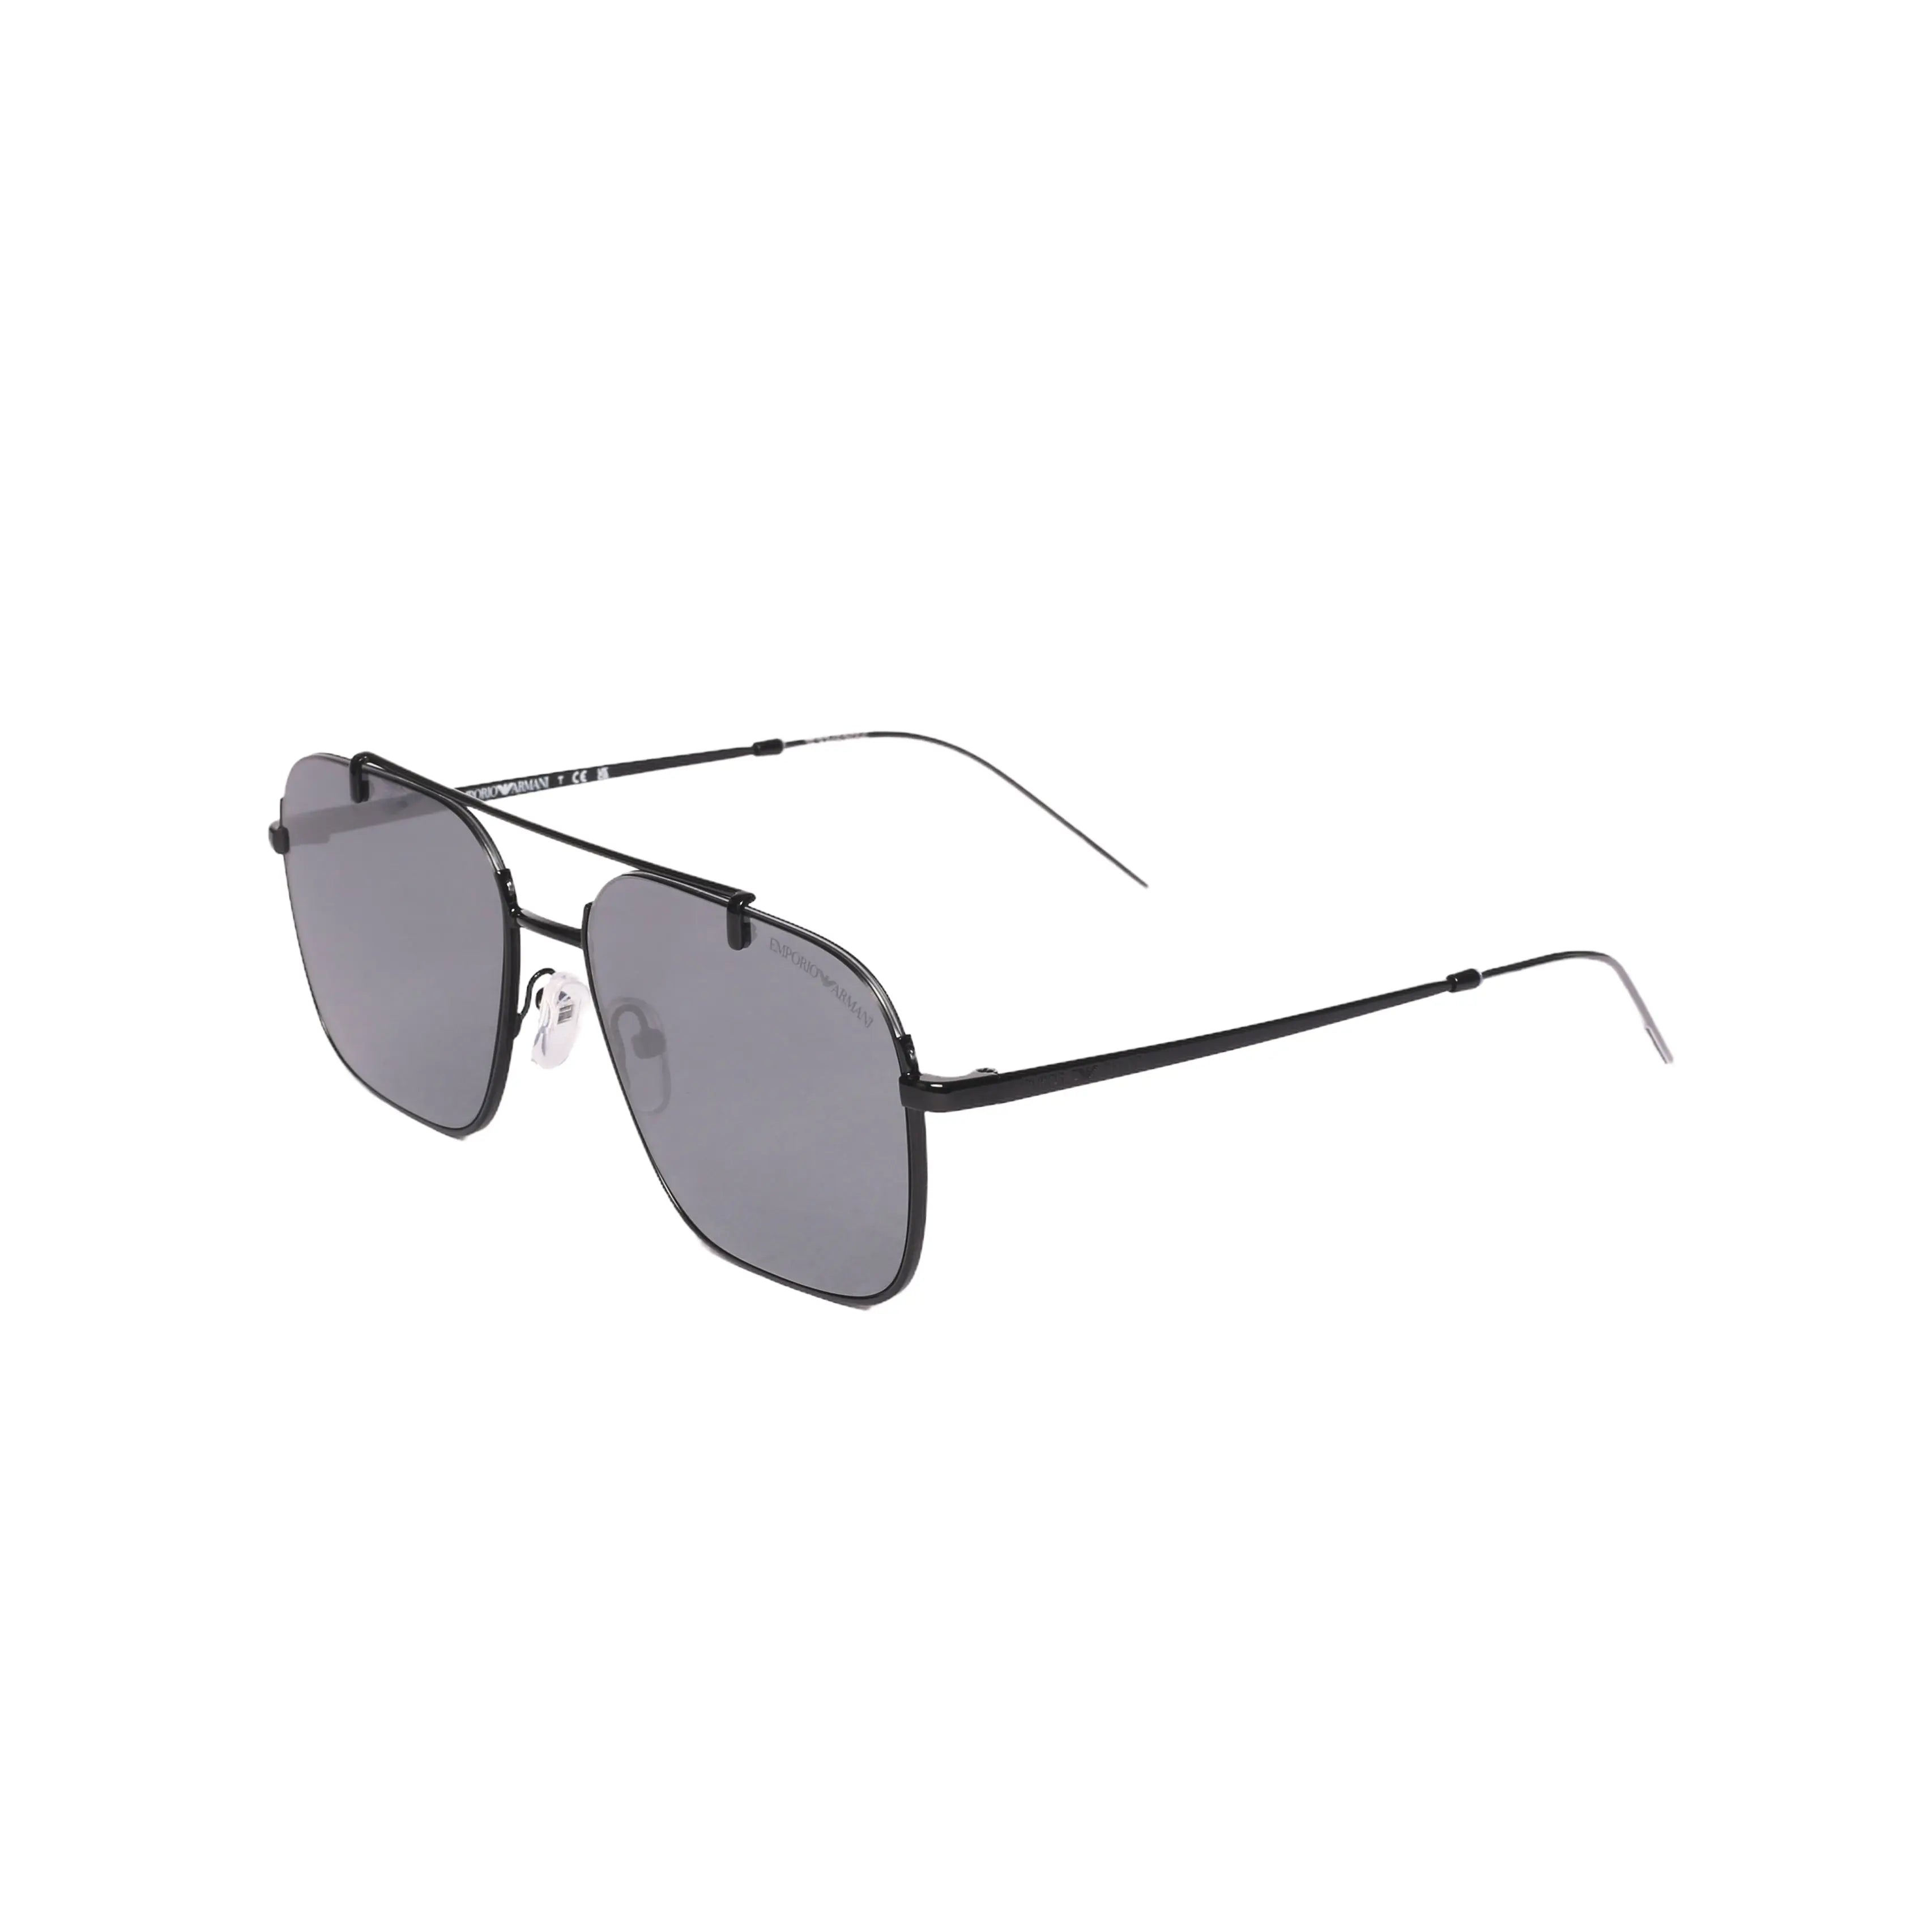 Emporio Armani-EA2150-57-30146 Sunglasses - Premium Sunglasses from Emporio Armani - Just Rs. 15490! Shop now at Laxmi Opticians